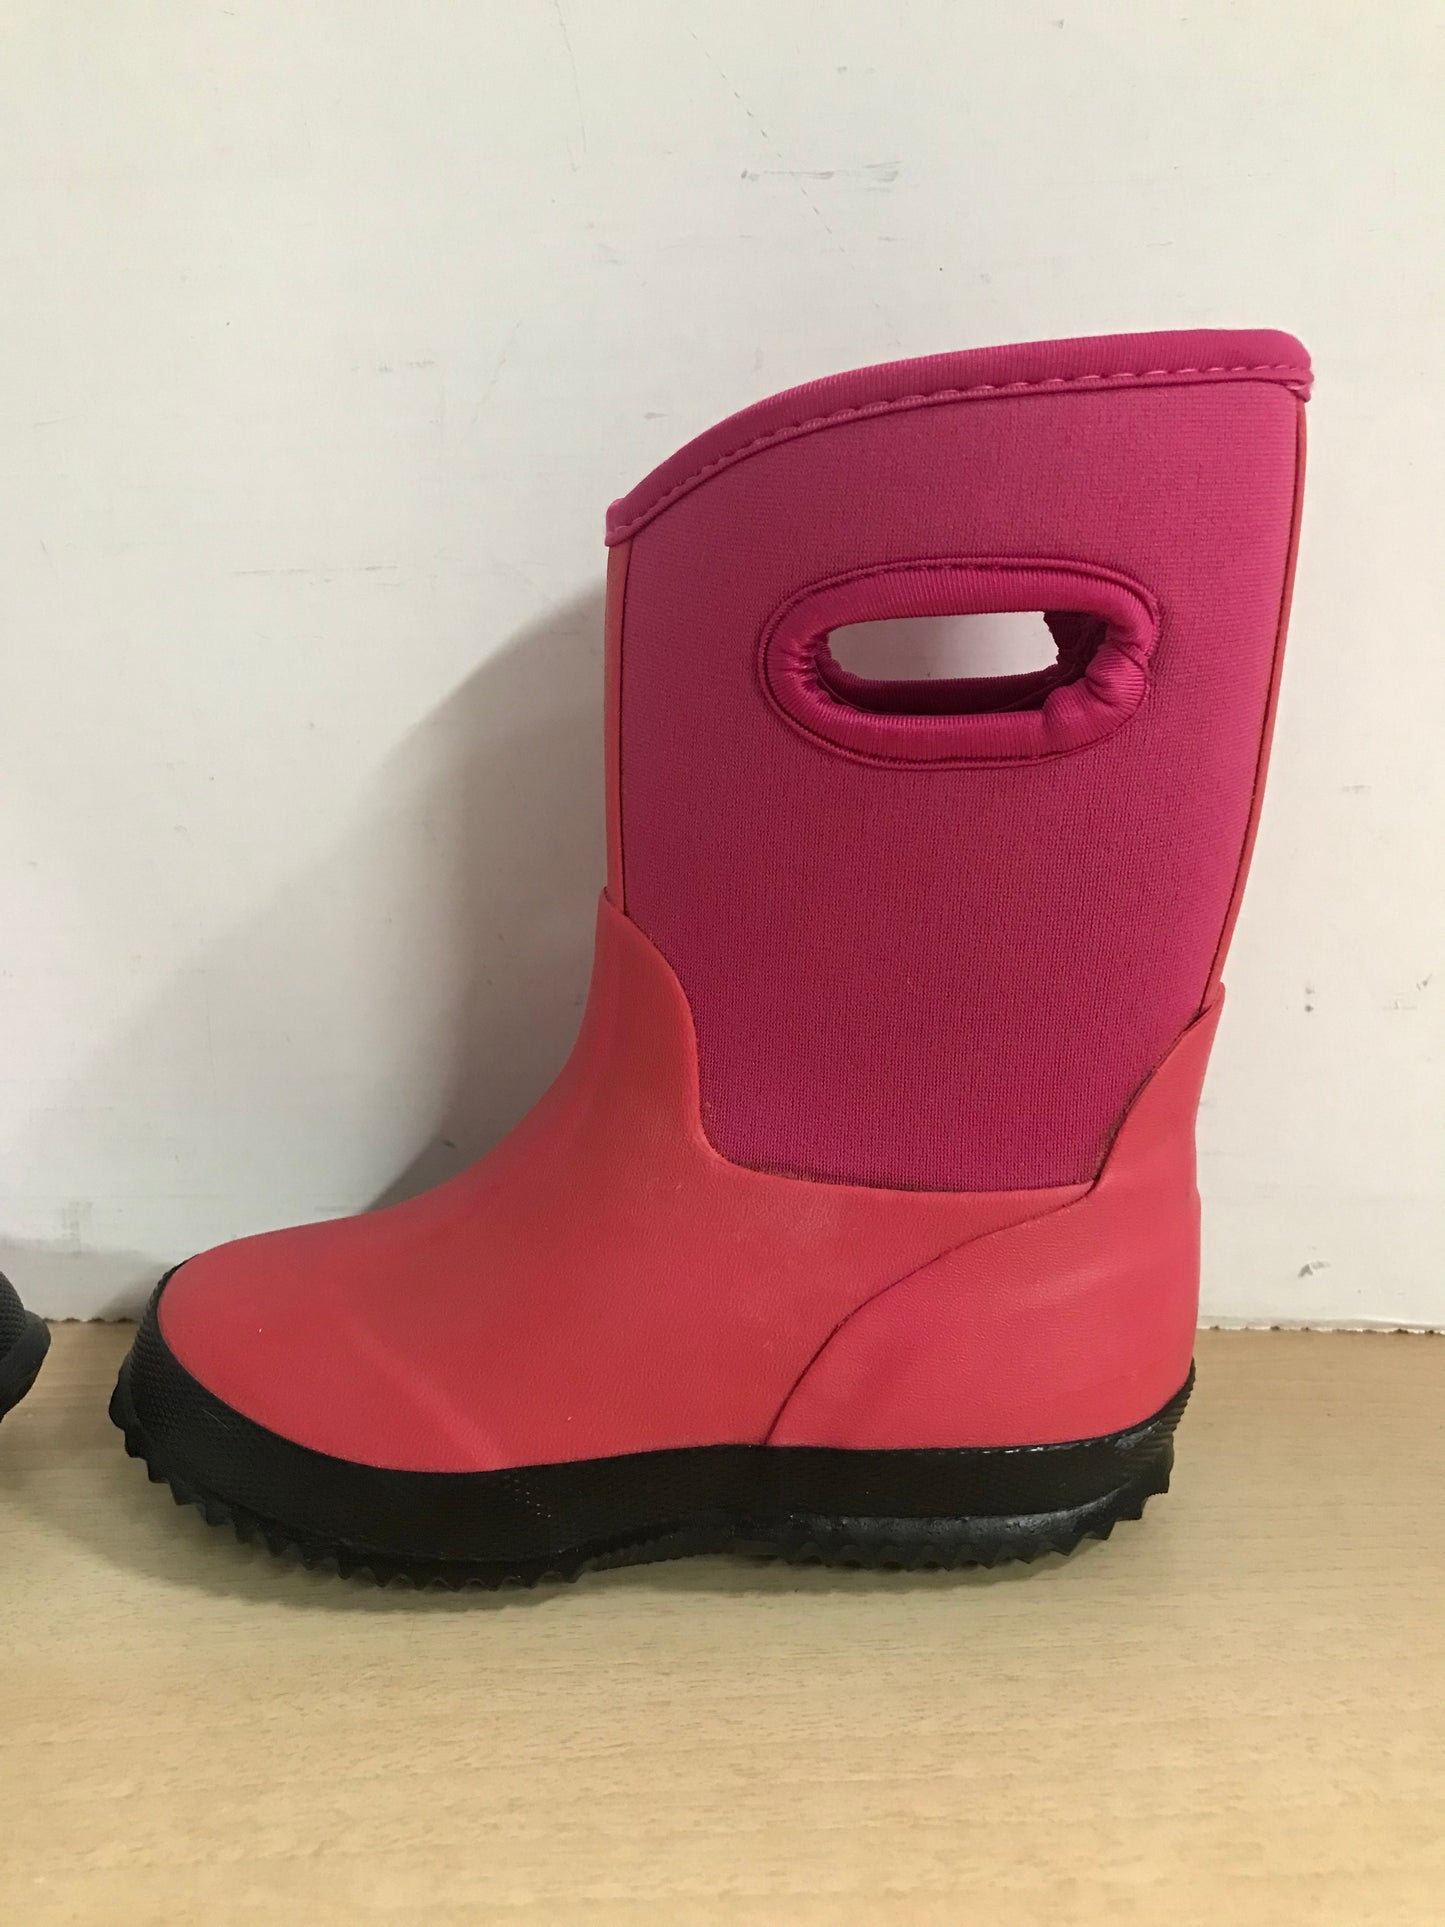 Bogs Style Child Size 9 Toddler Neoprene Rubber Rain Winter Boots Waterproof Fushia Excellent